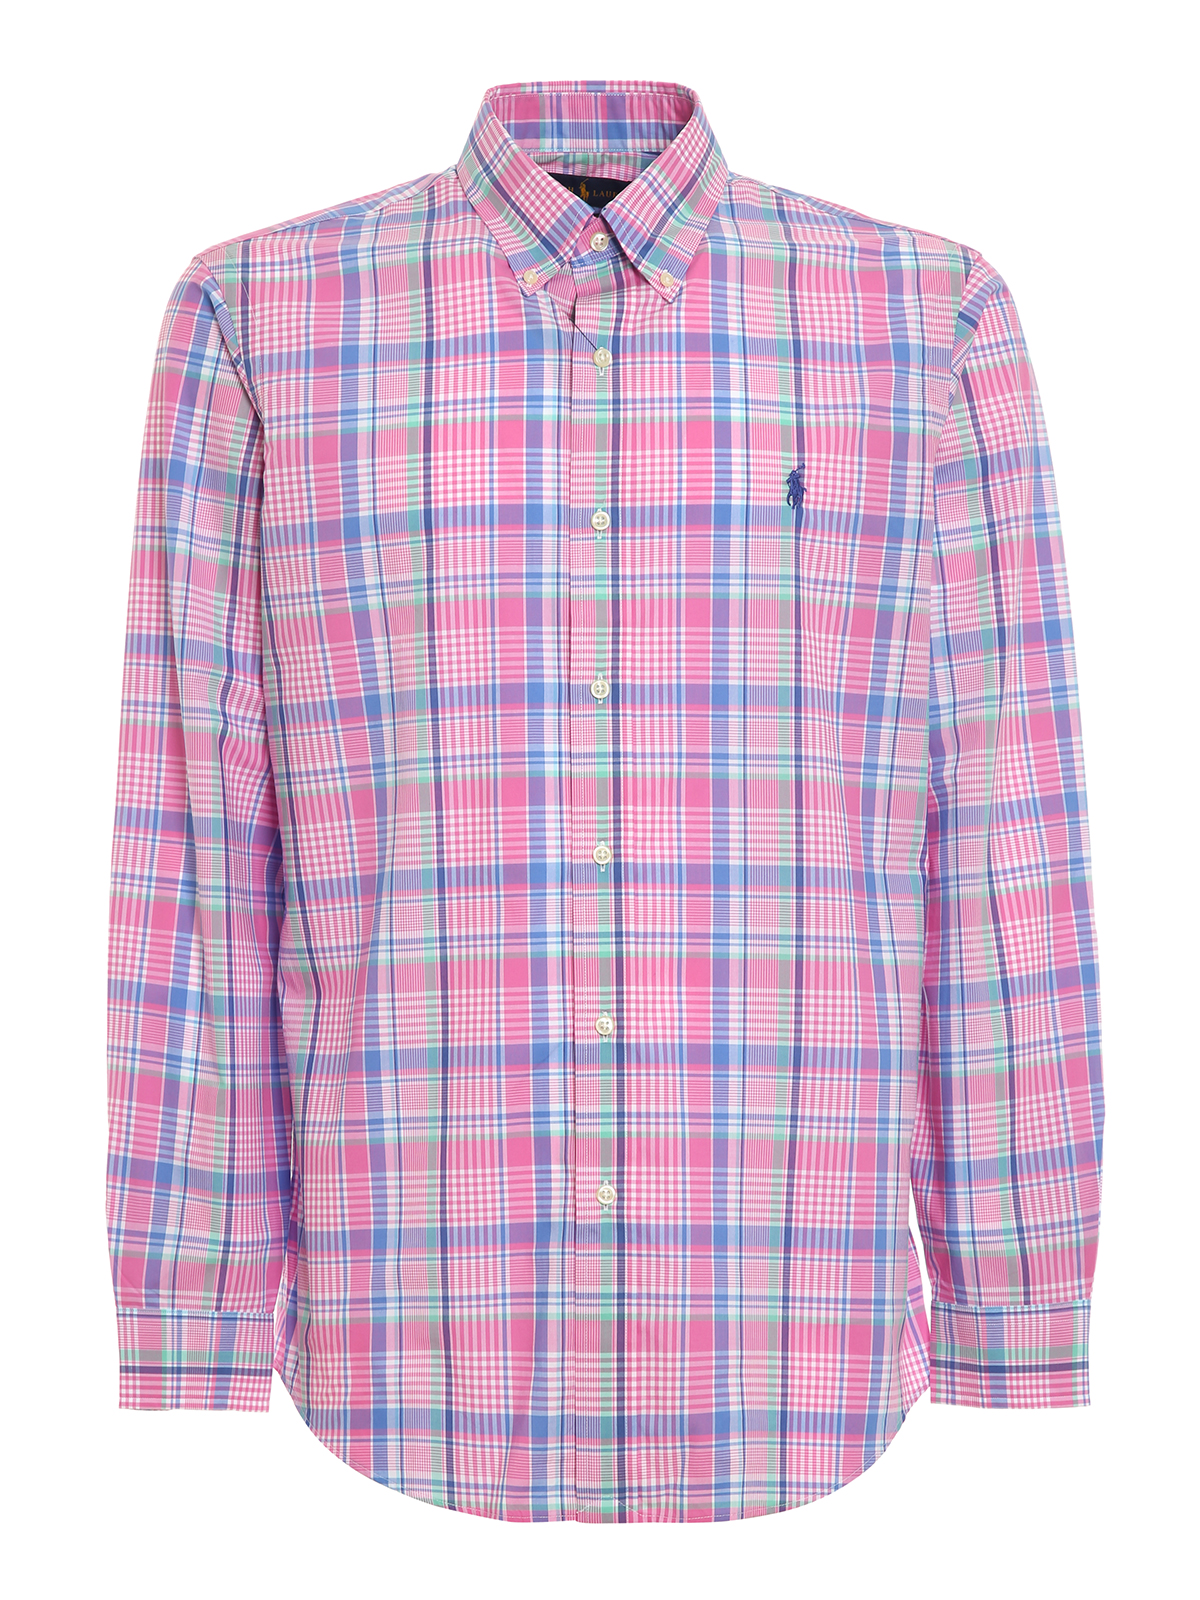 Shirts Polo Ralph Lauren - Madras shirt - 710837267002 | iKRIX.com